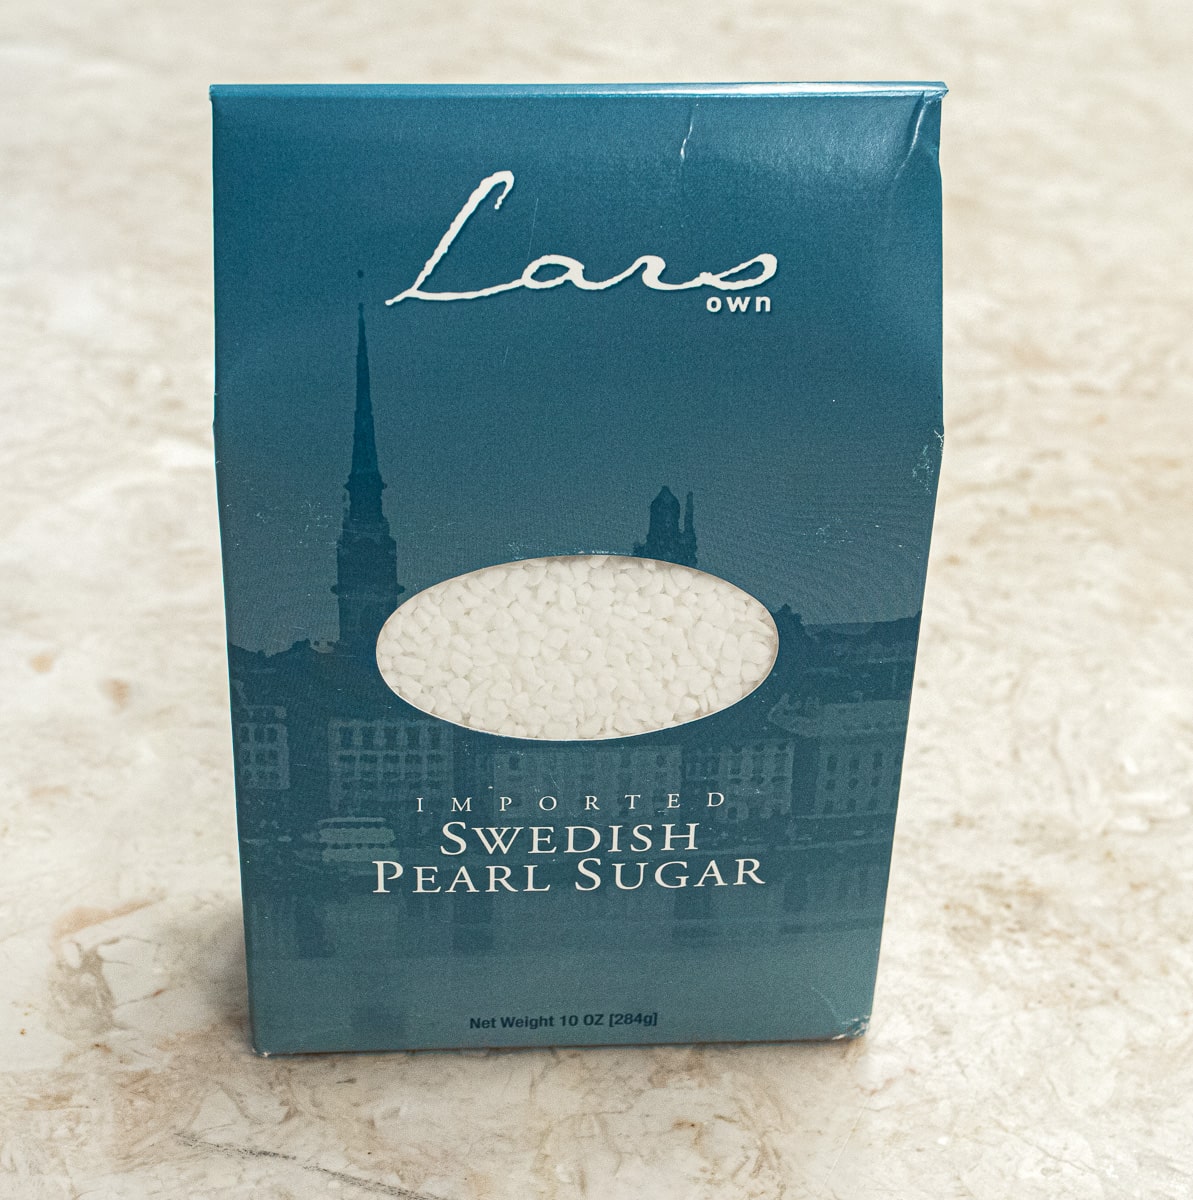 A package of Swedish Pearl Sugar